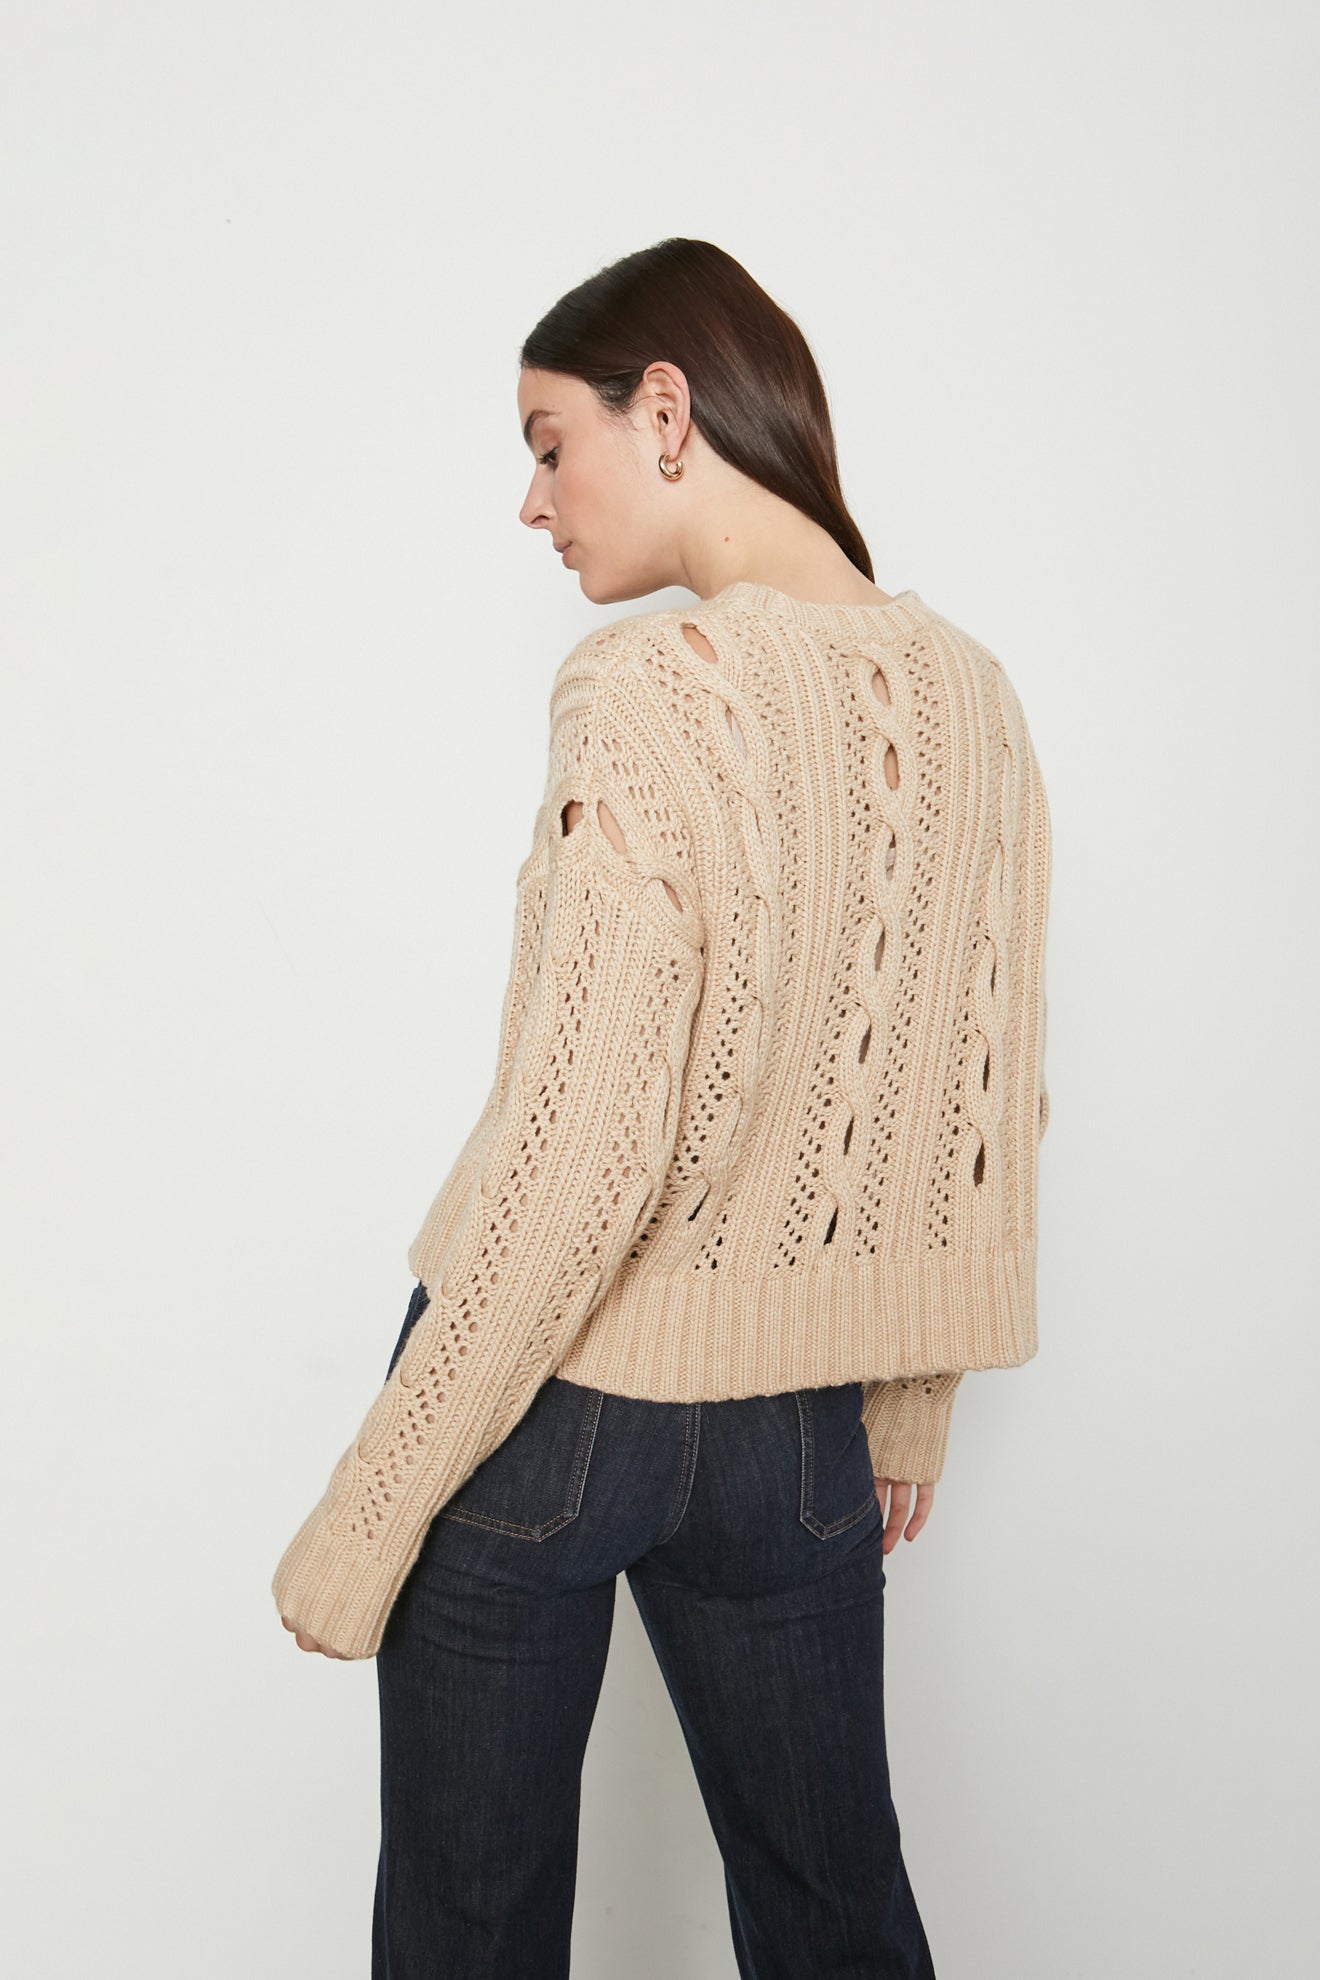 Velma Sweater Top